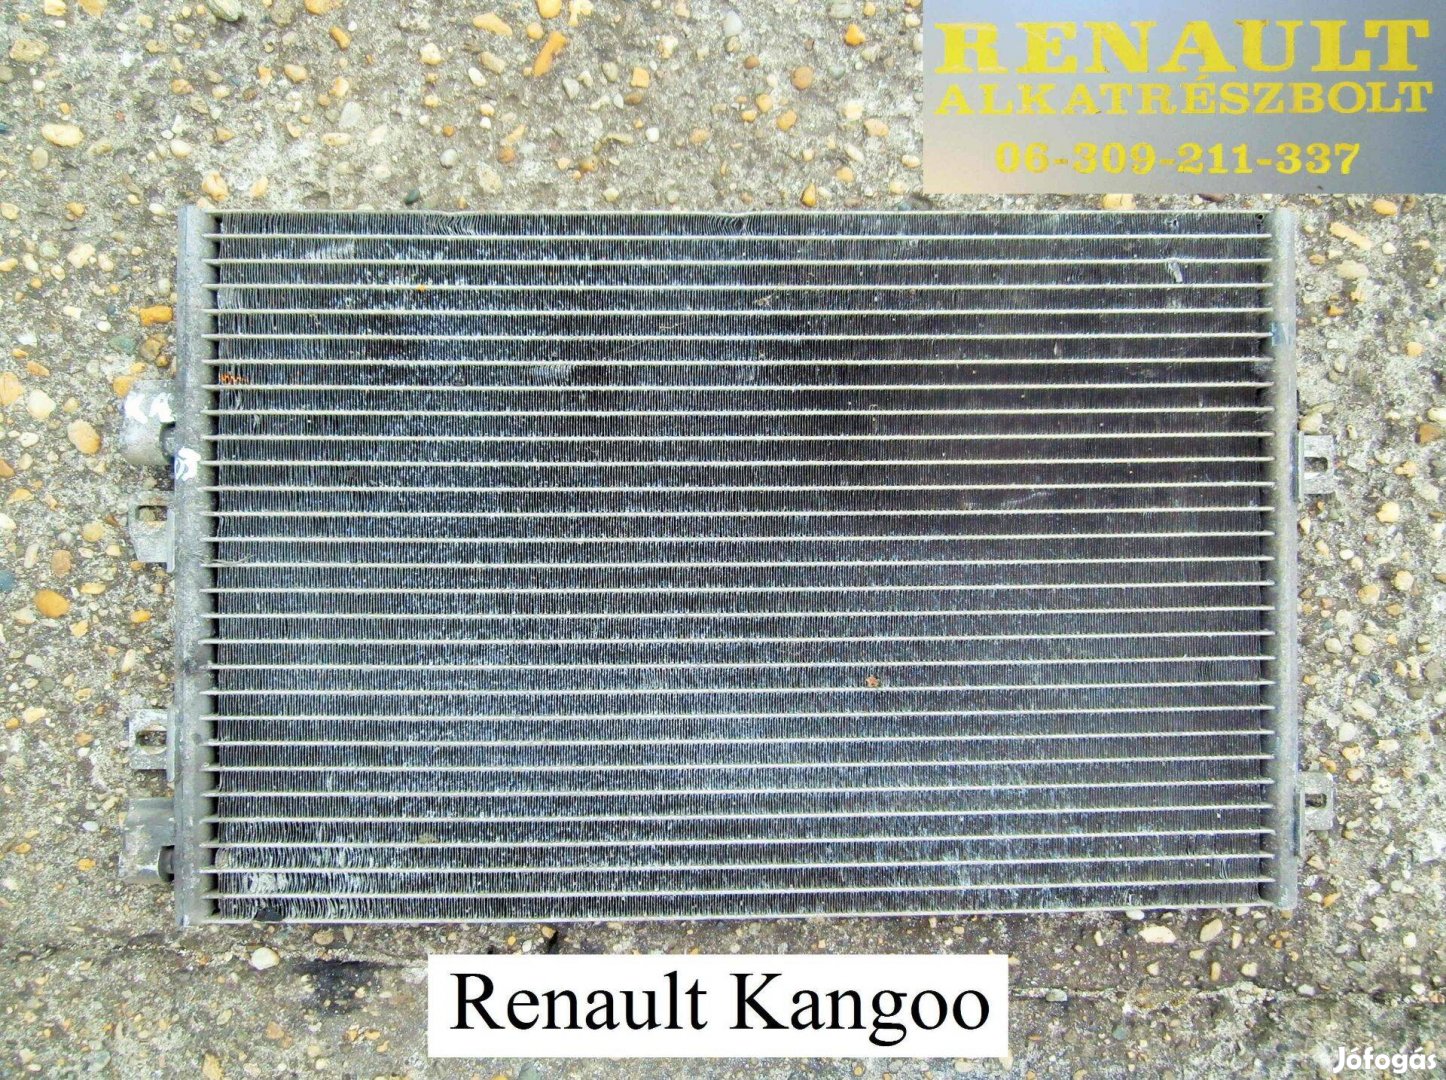 Renault Kangoo 2003 klímahűtő